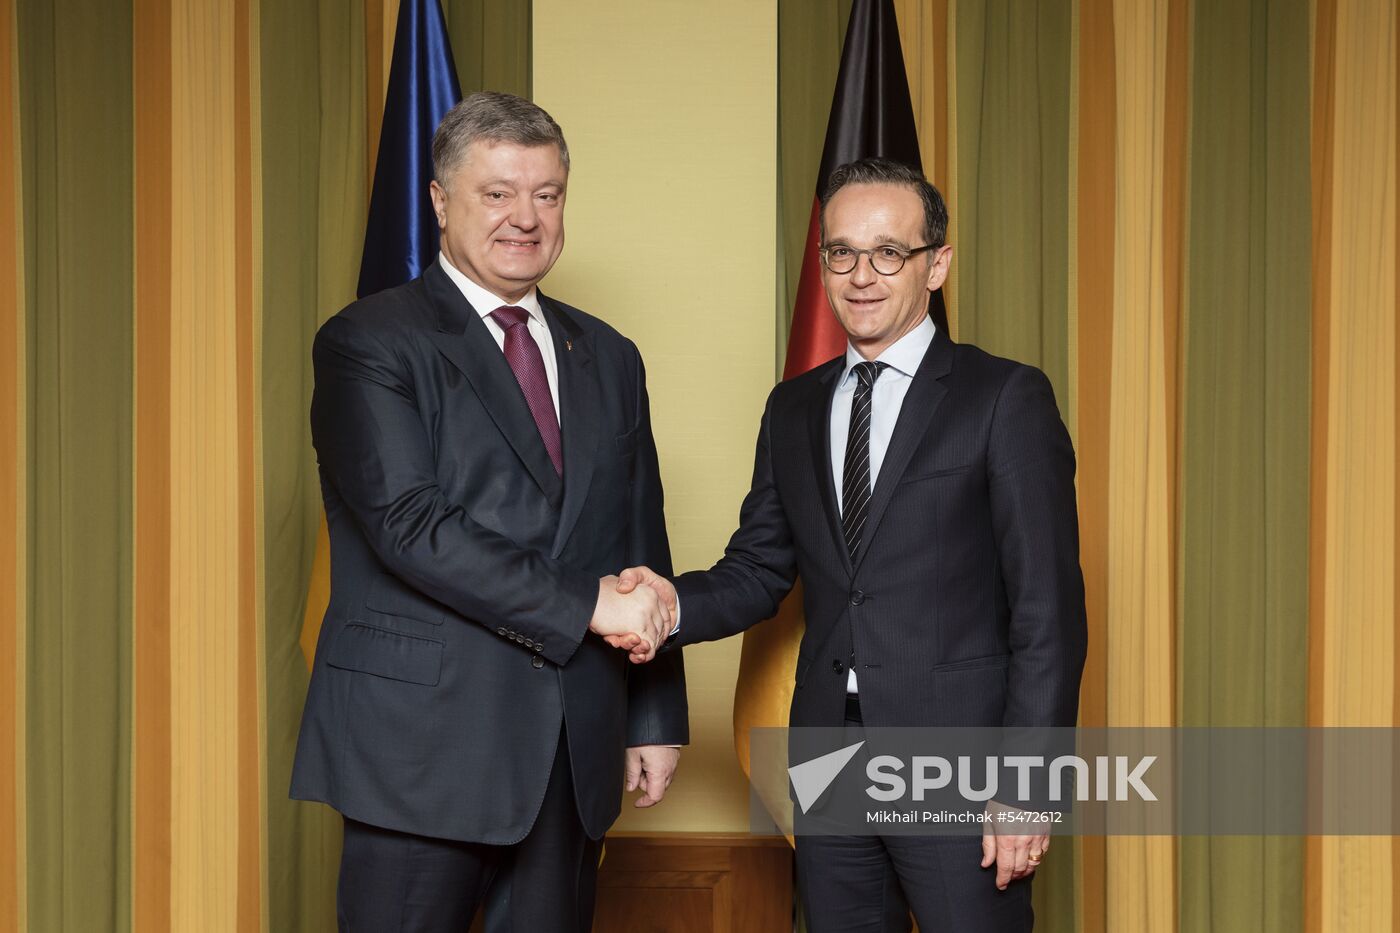 Ukrainian President Petro Poroshenko's visit to Germany